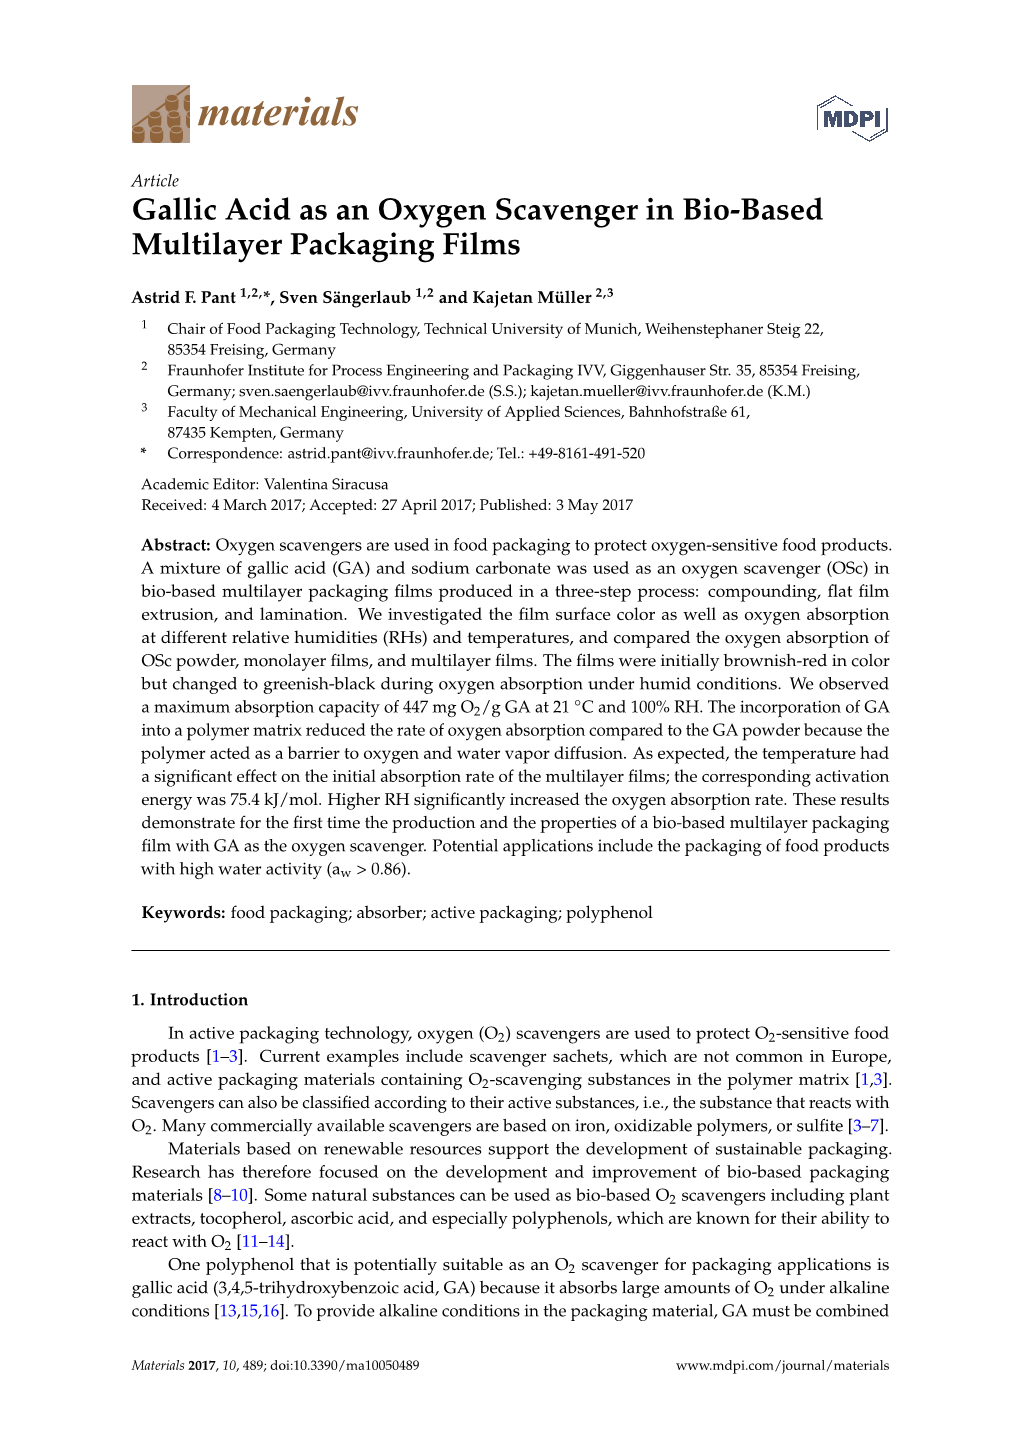 Gallic Acid As an Oxygen Scavenger in Bio-Based Multilayer Packaging Films